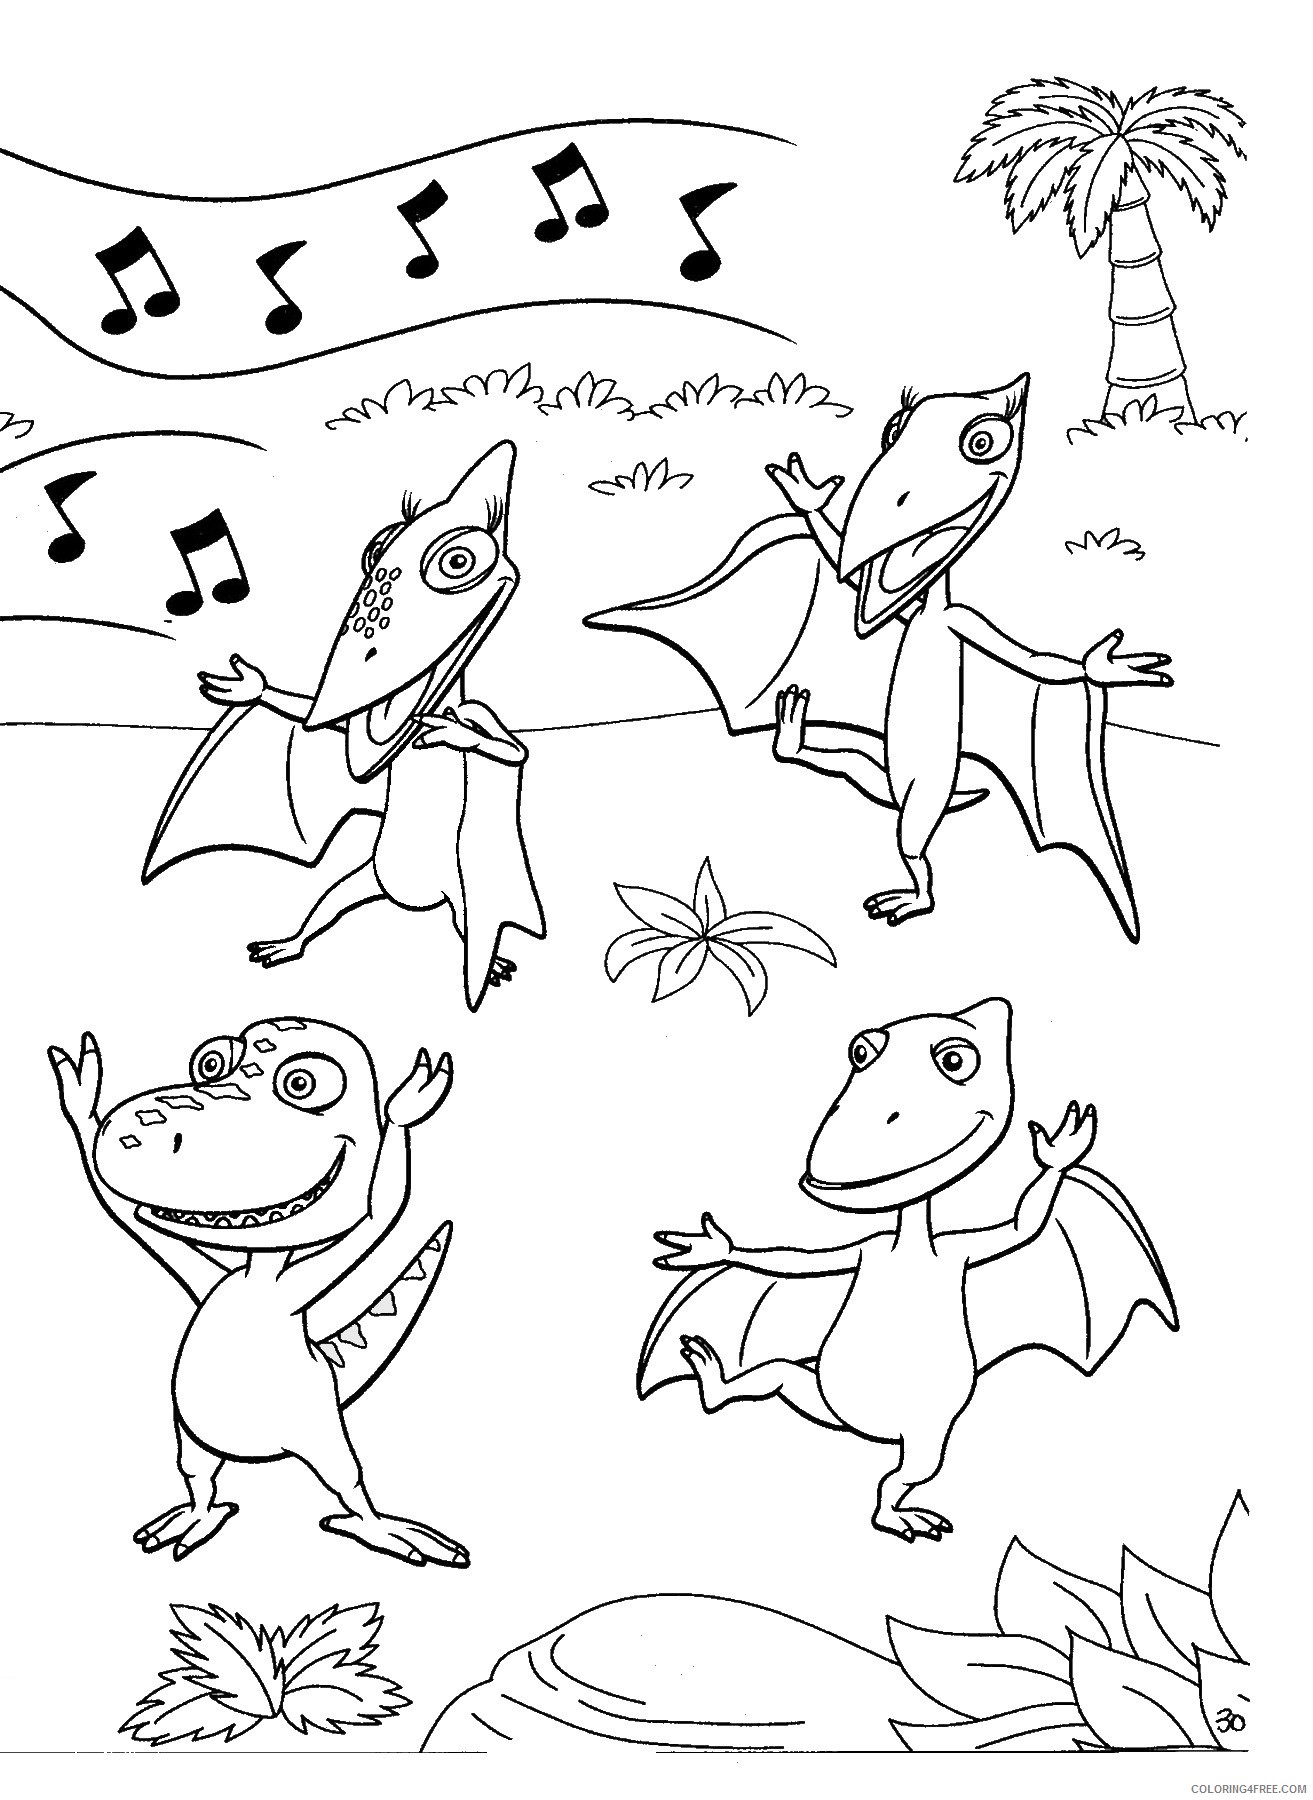 Dinosaur Train Coloring Pages Cartoons dino_train_85 Printable 2020 2217 Coloring4free